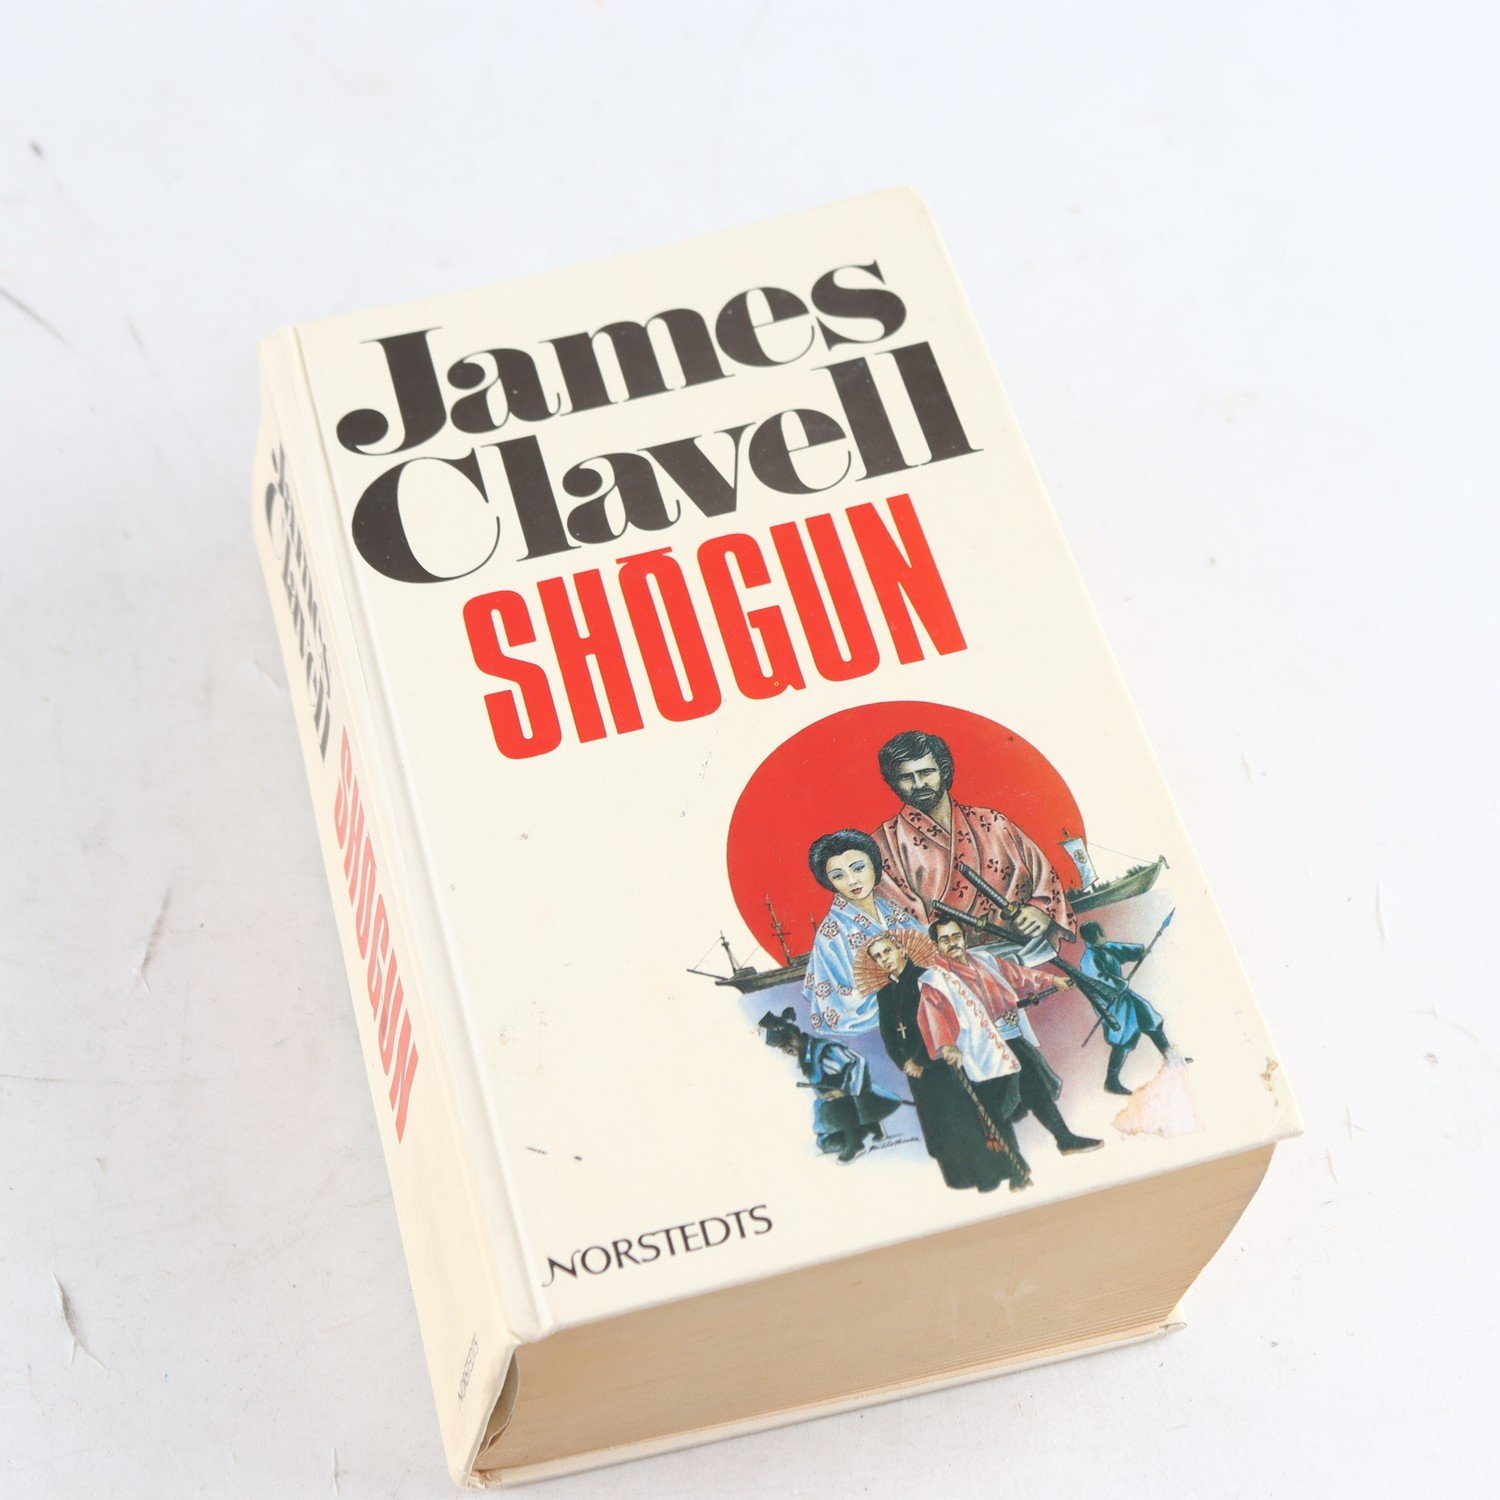 James Clavell, Shogun